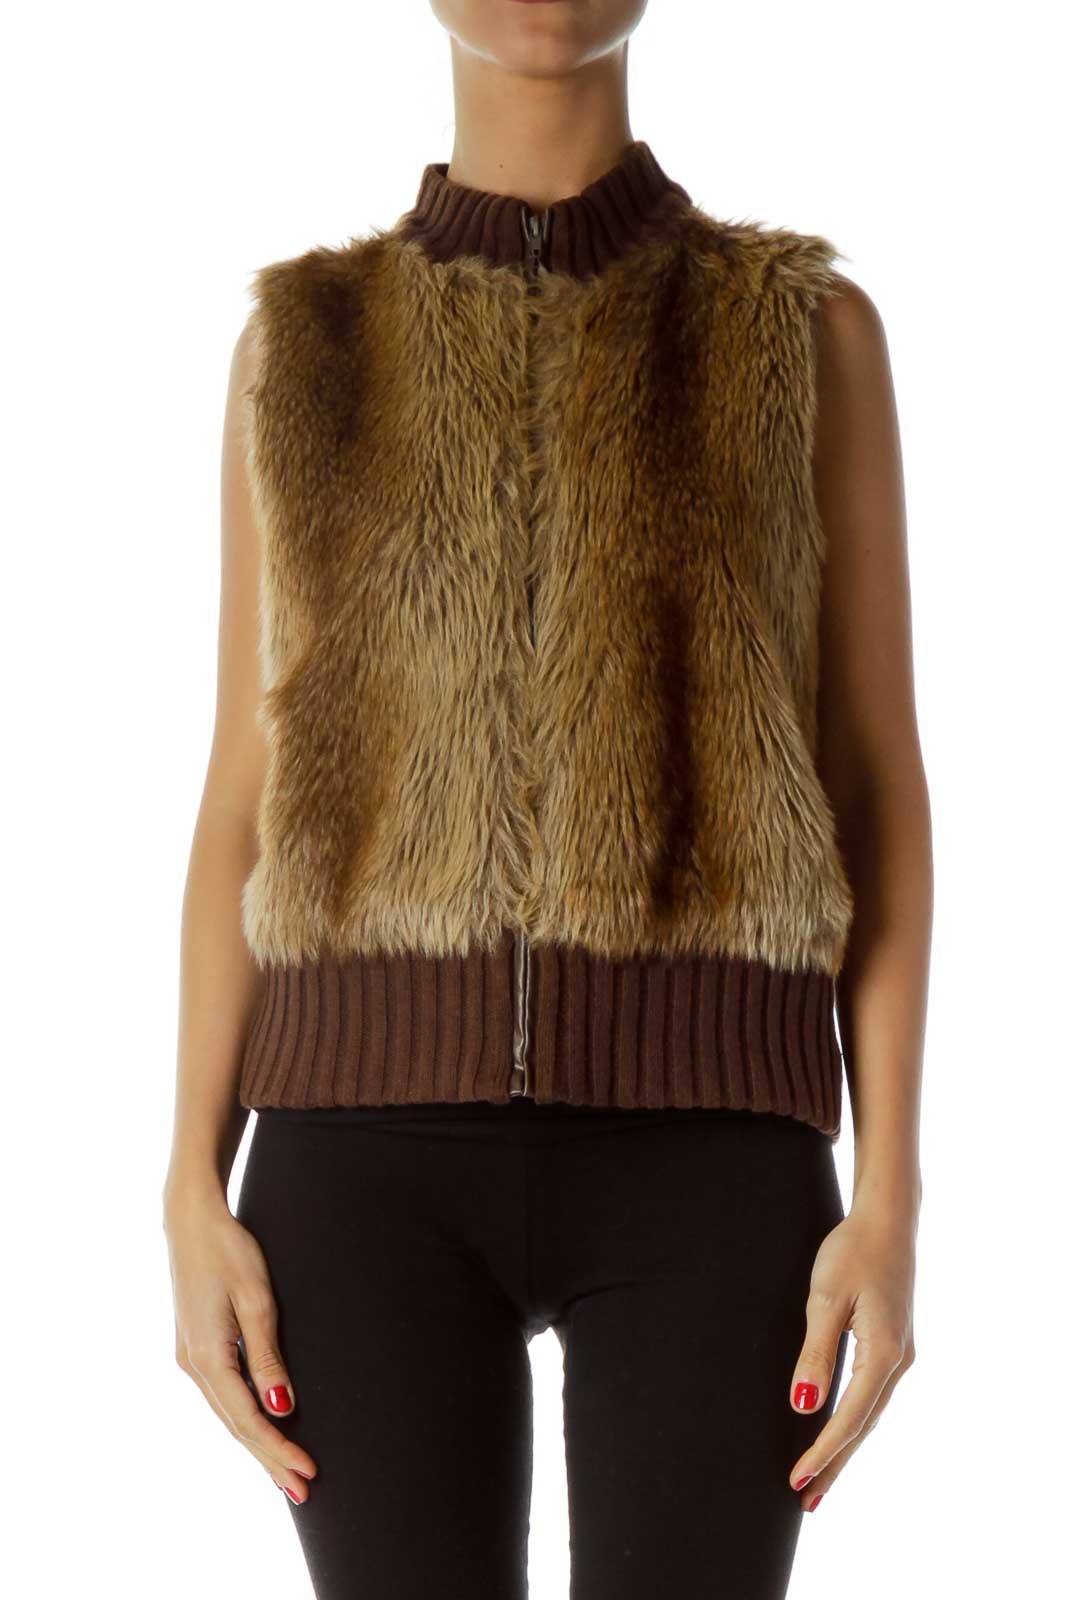 SilkRoll - Brown Faux-Fur Vest Cotton Ramie | SilkRoll